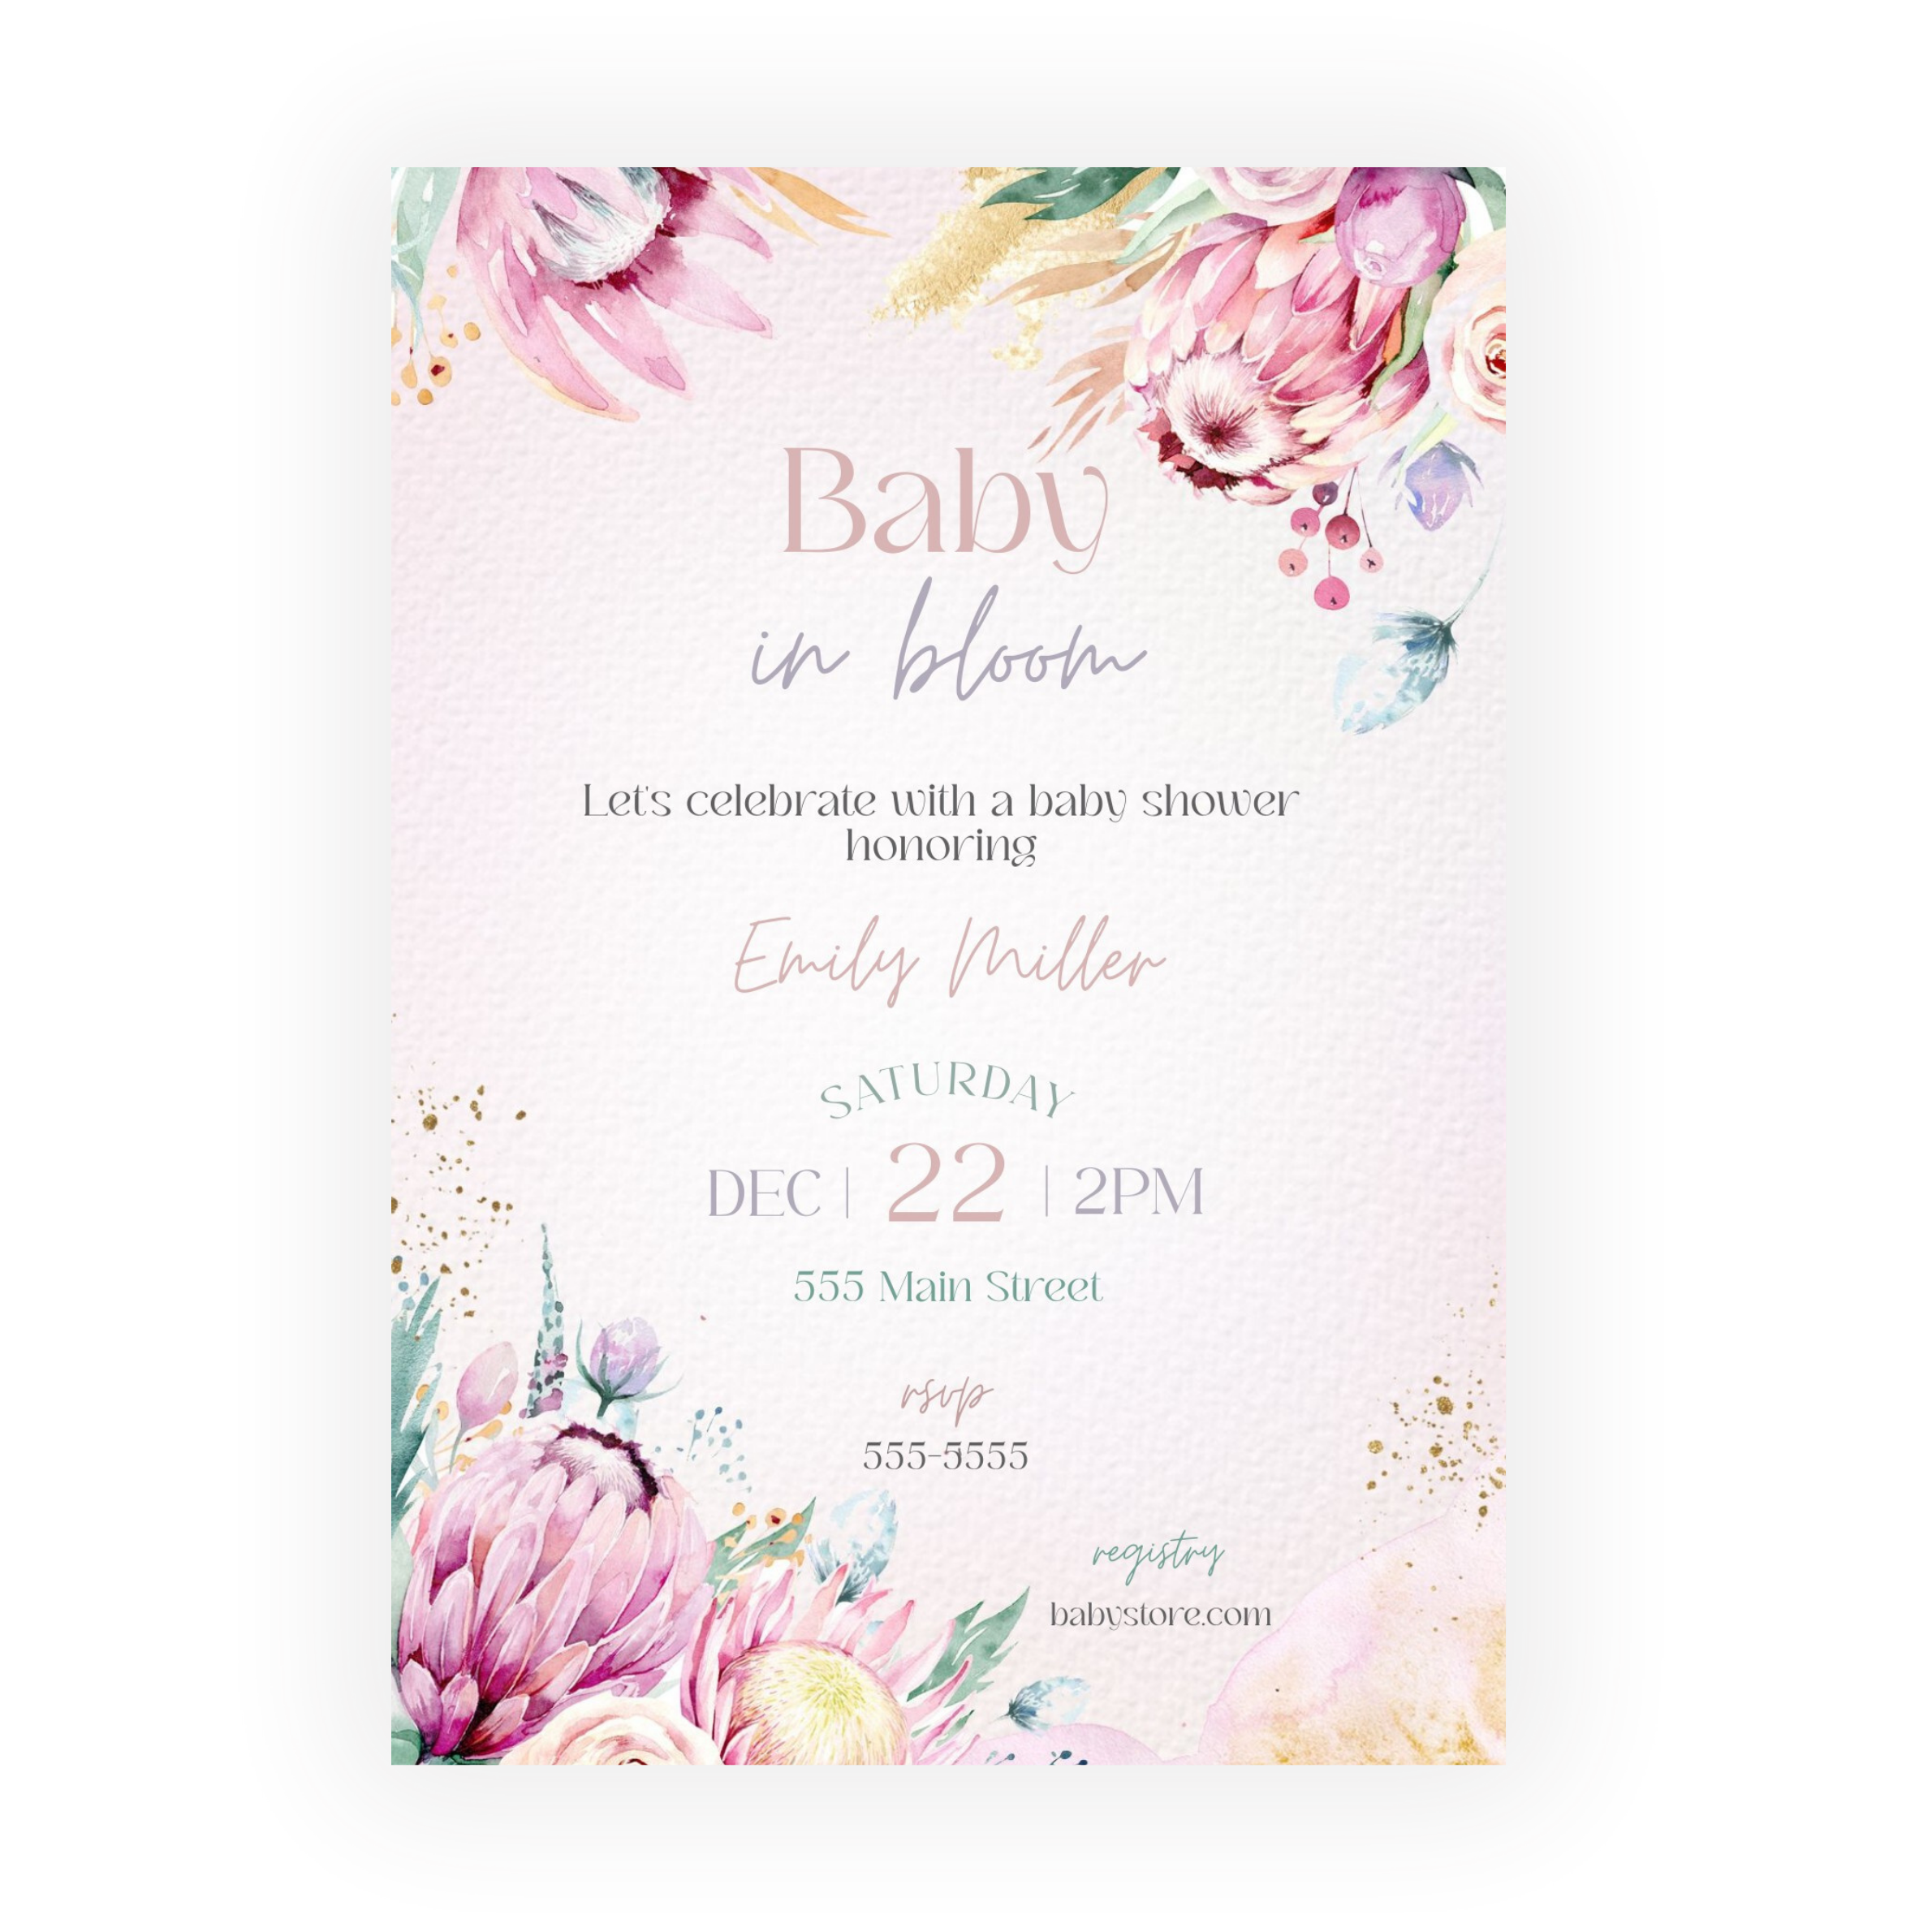 Baby in bloom baby shower invitation